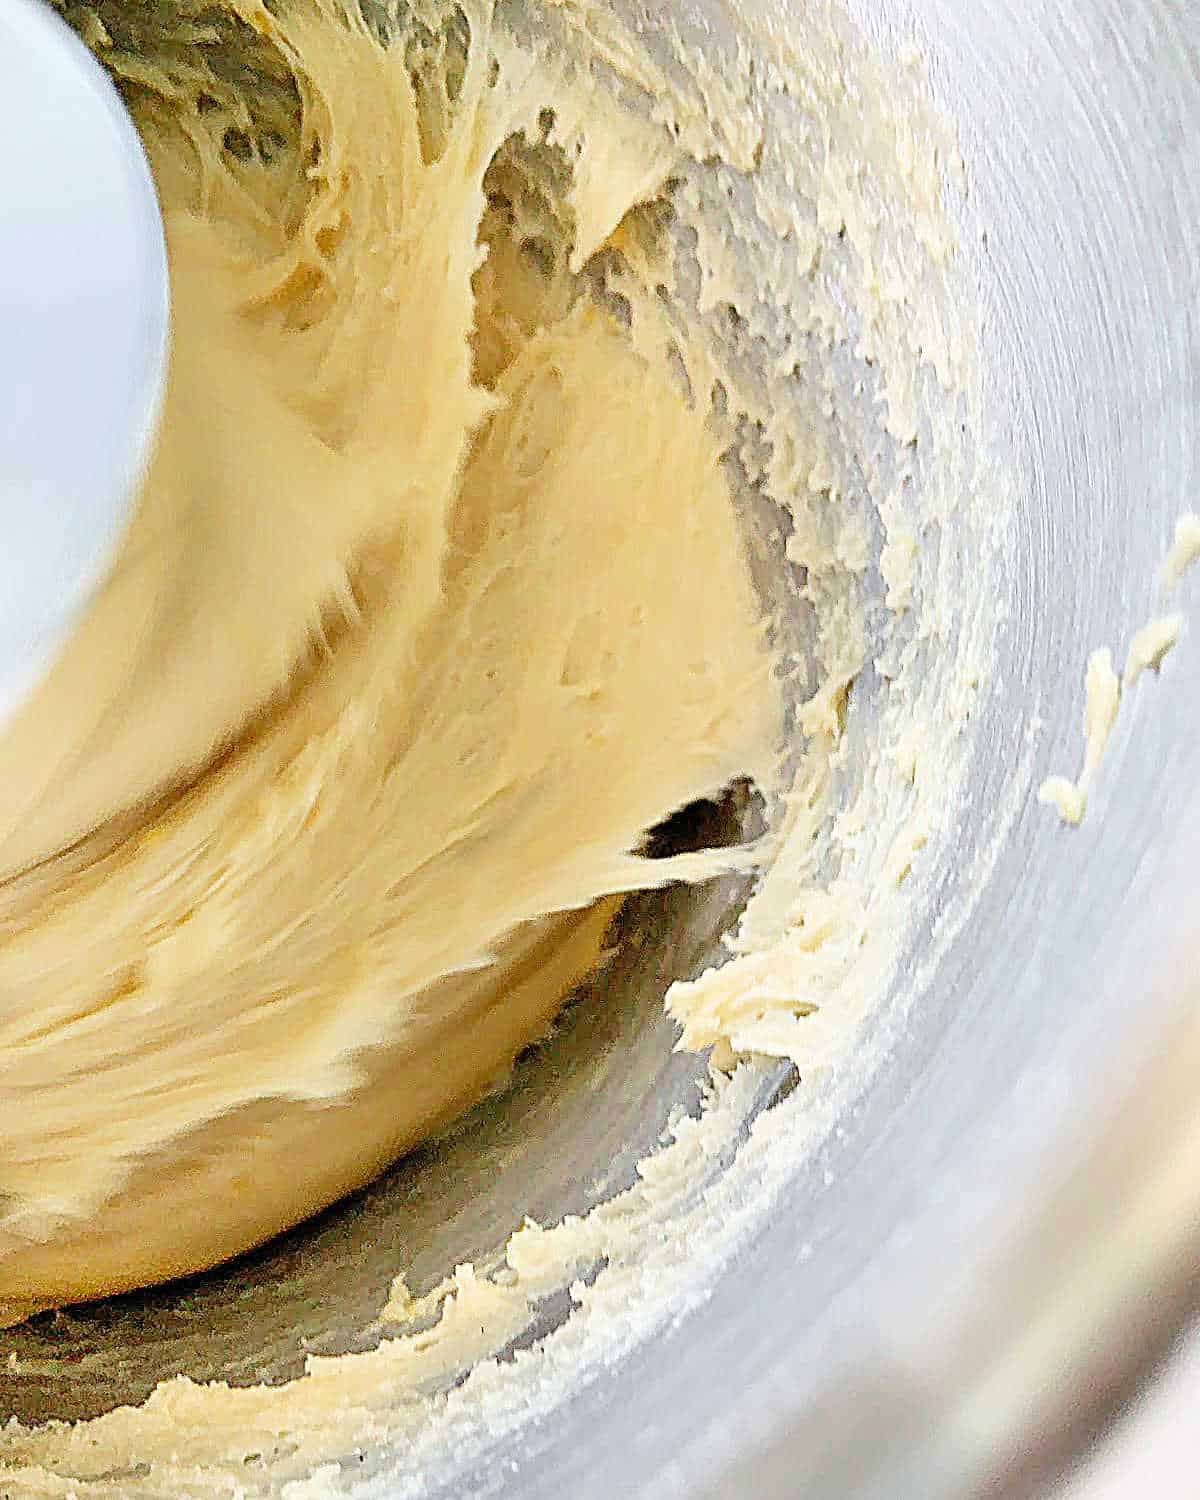 Kneading pandoro dough in a stand mixer bowl.